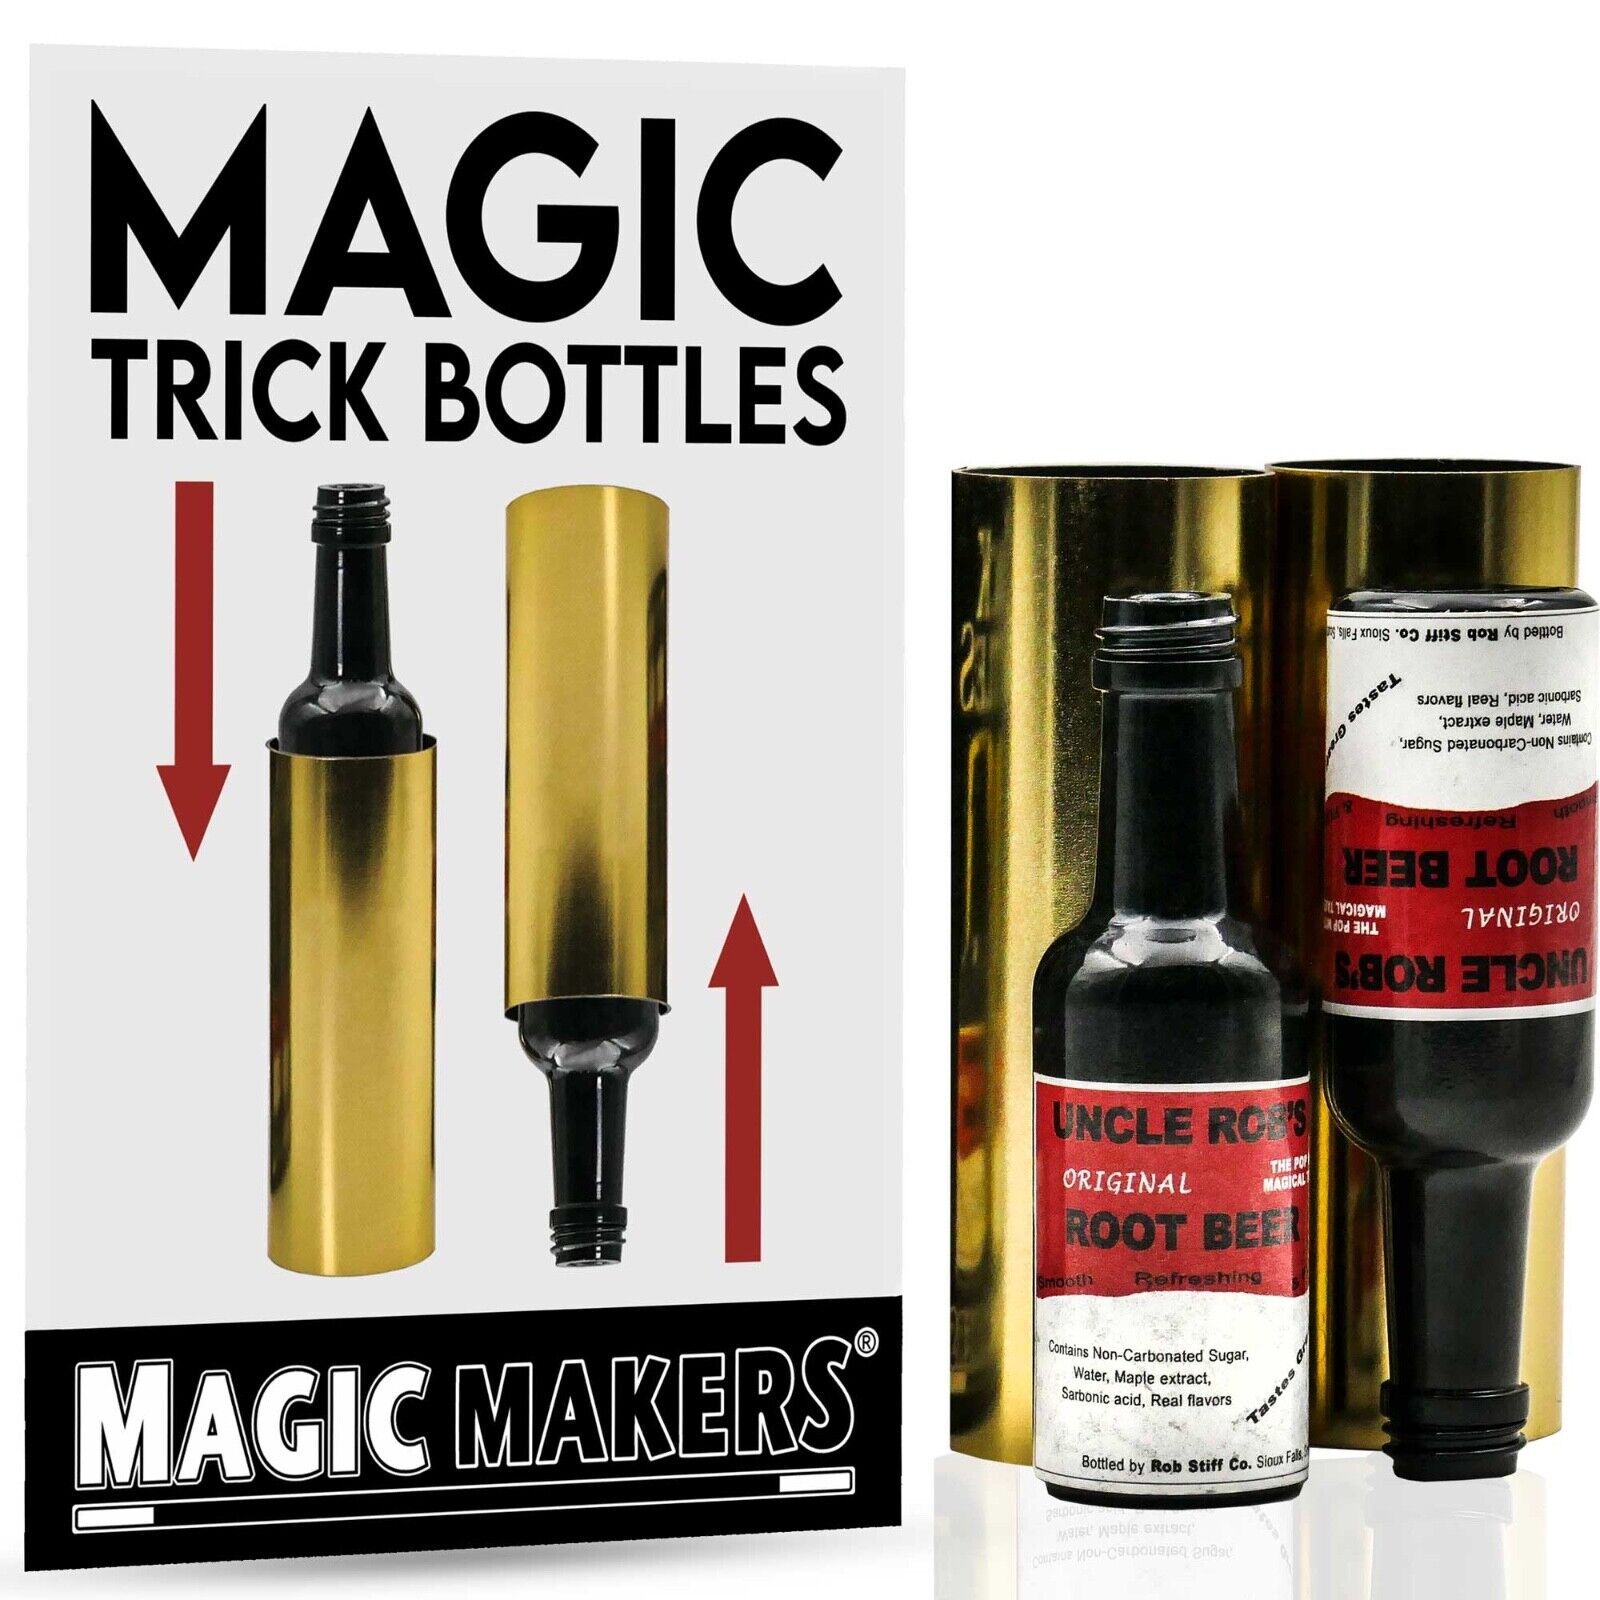 Magic Makers Trick Bottles - A Topsy Turvy Magic Trick - Easy Magic